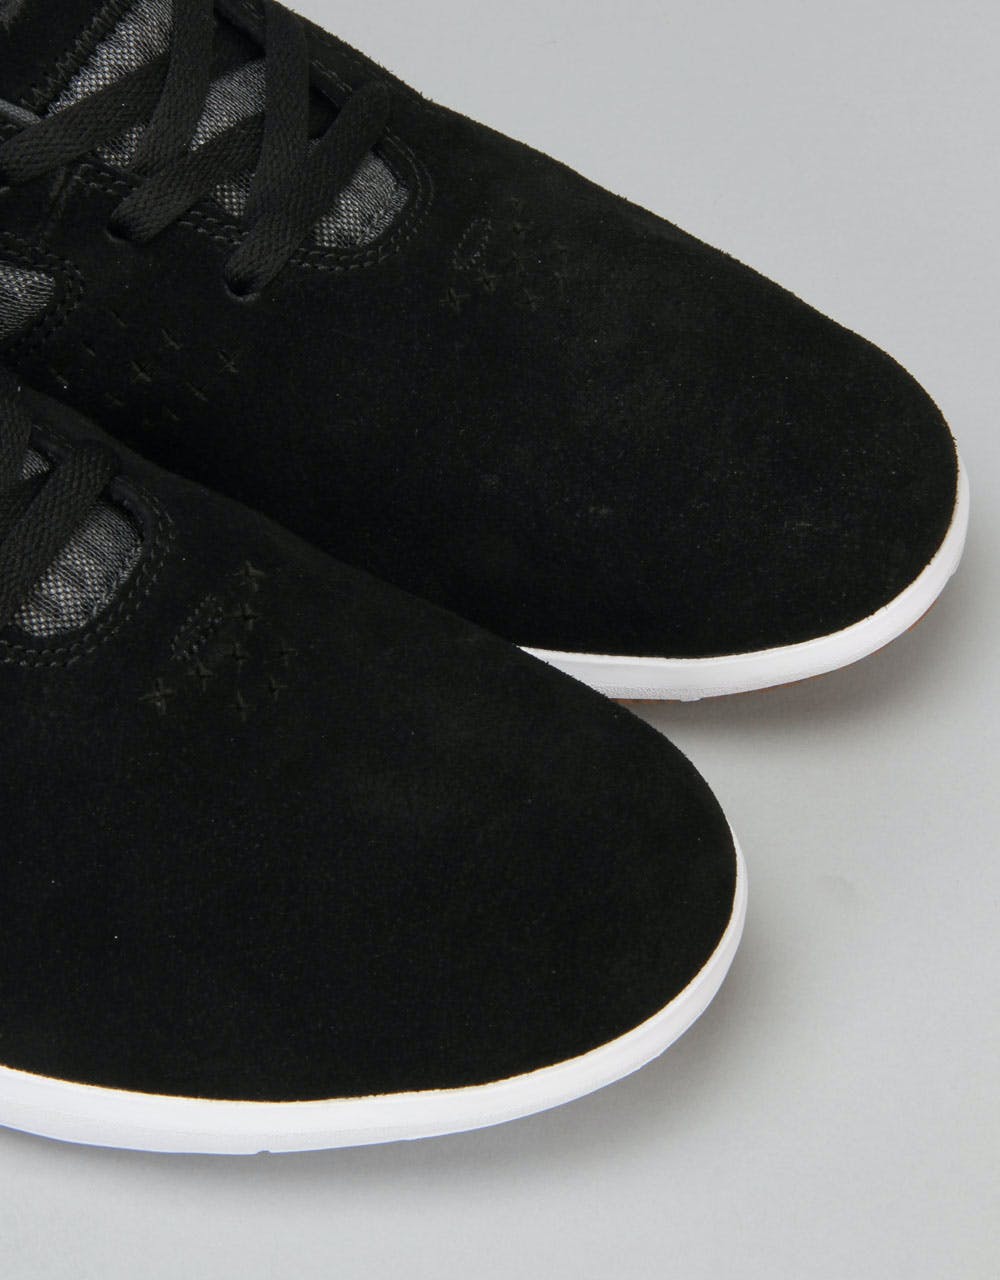 DC New Jack S Skate Shoes - Black